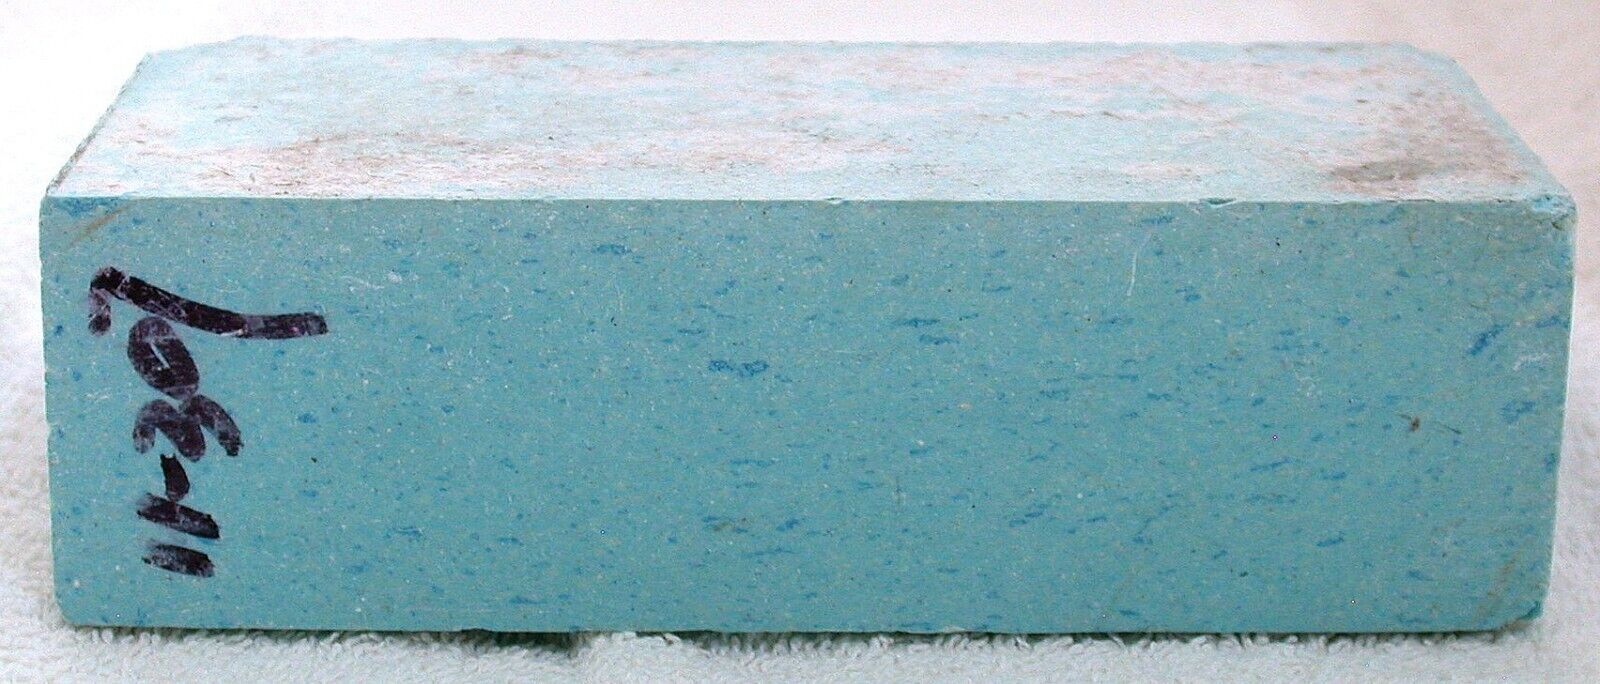 5 Lb 7.2 Oz 2474 Gram Blue White Larimar Speckle Resin Block Cab Carving Rough